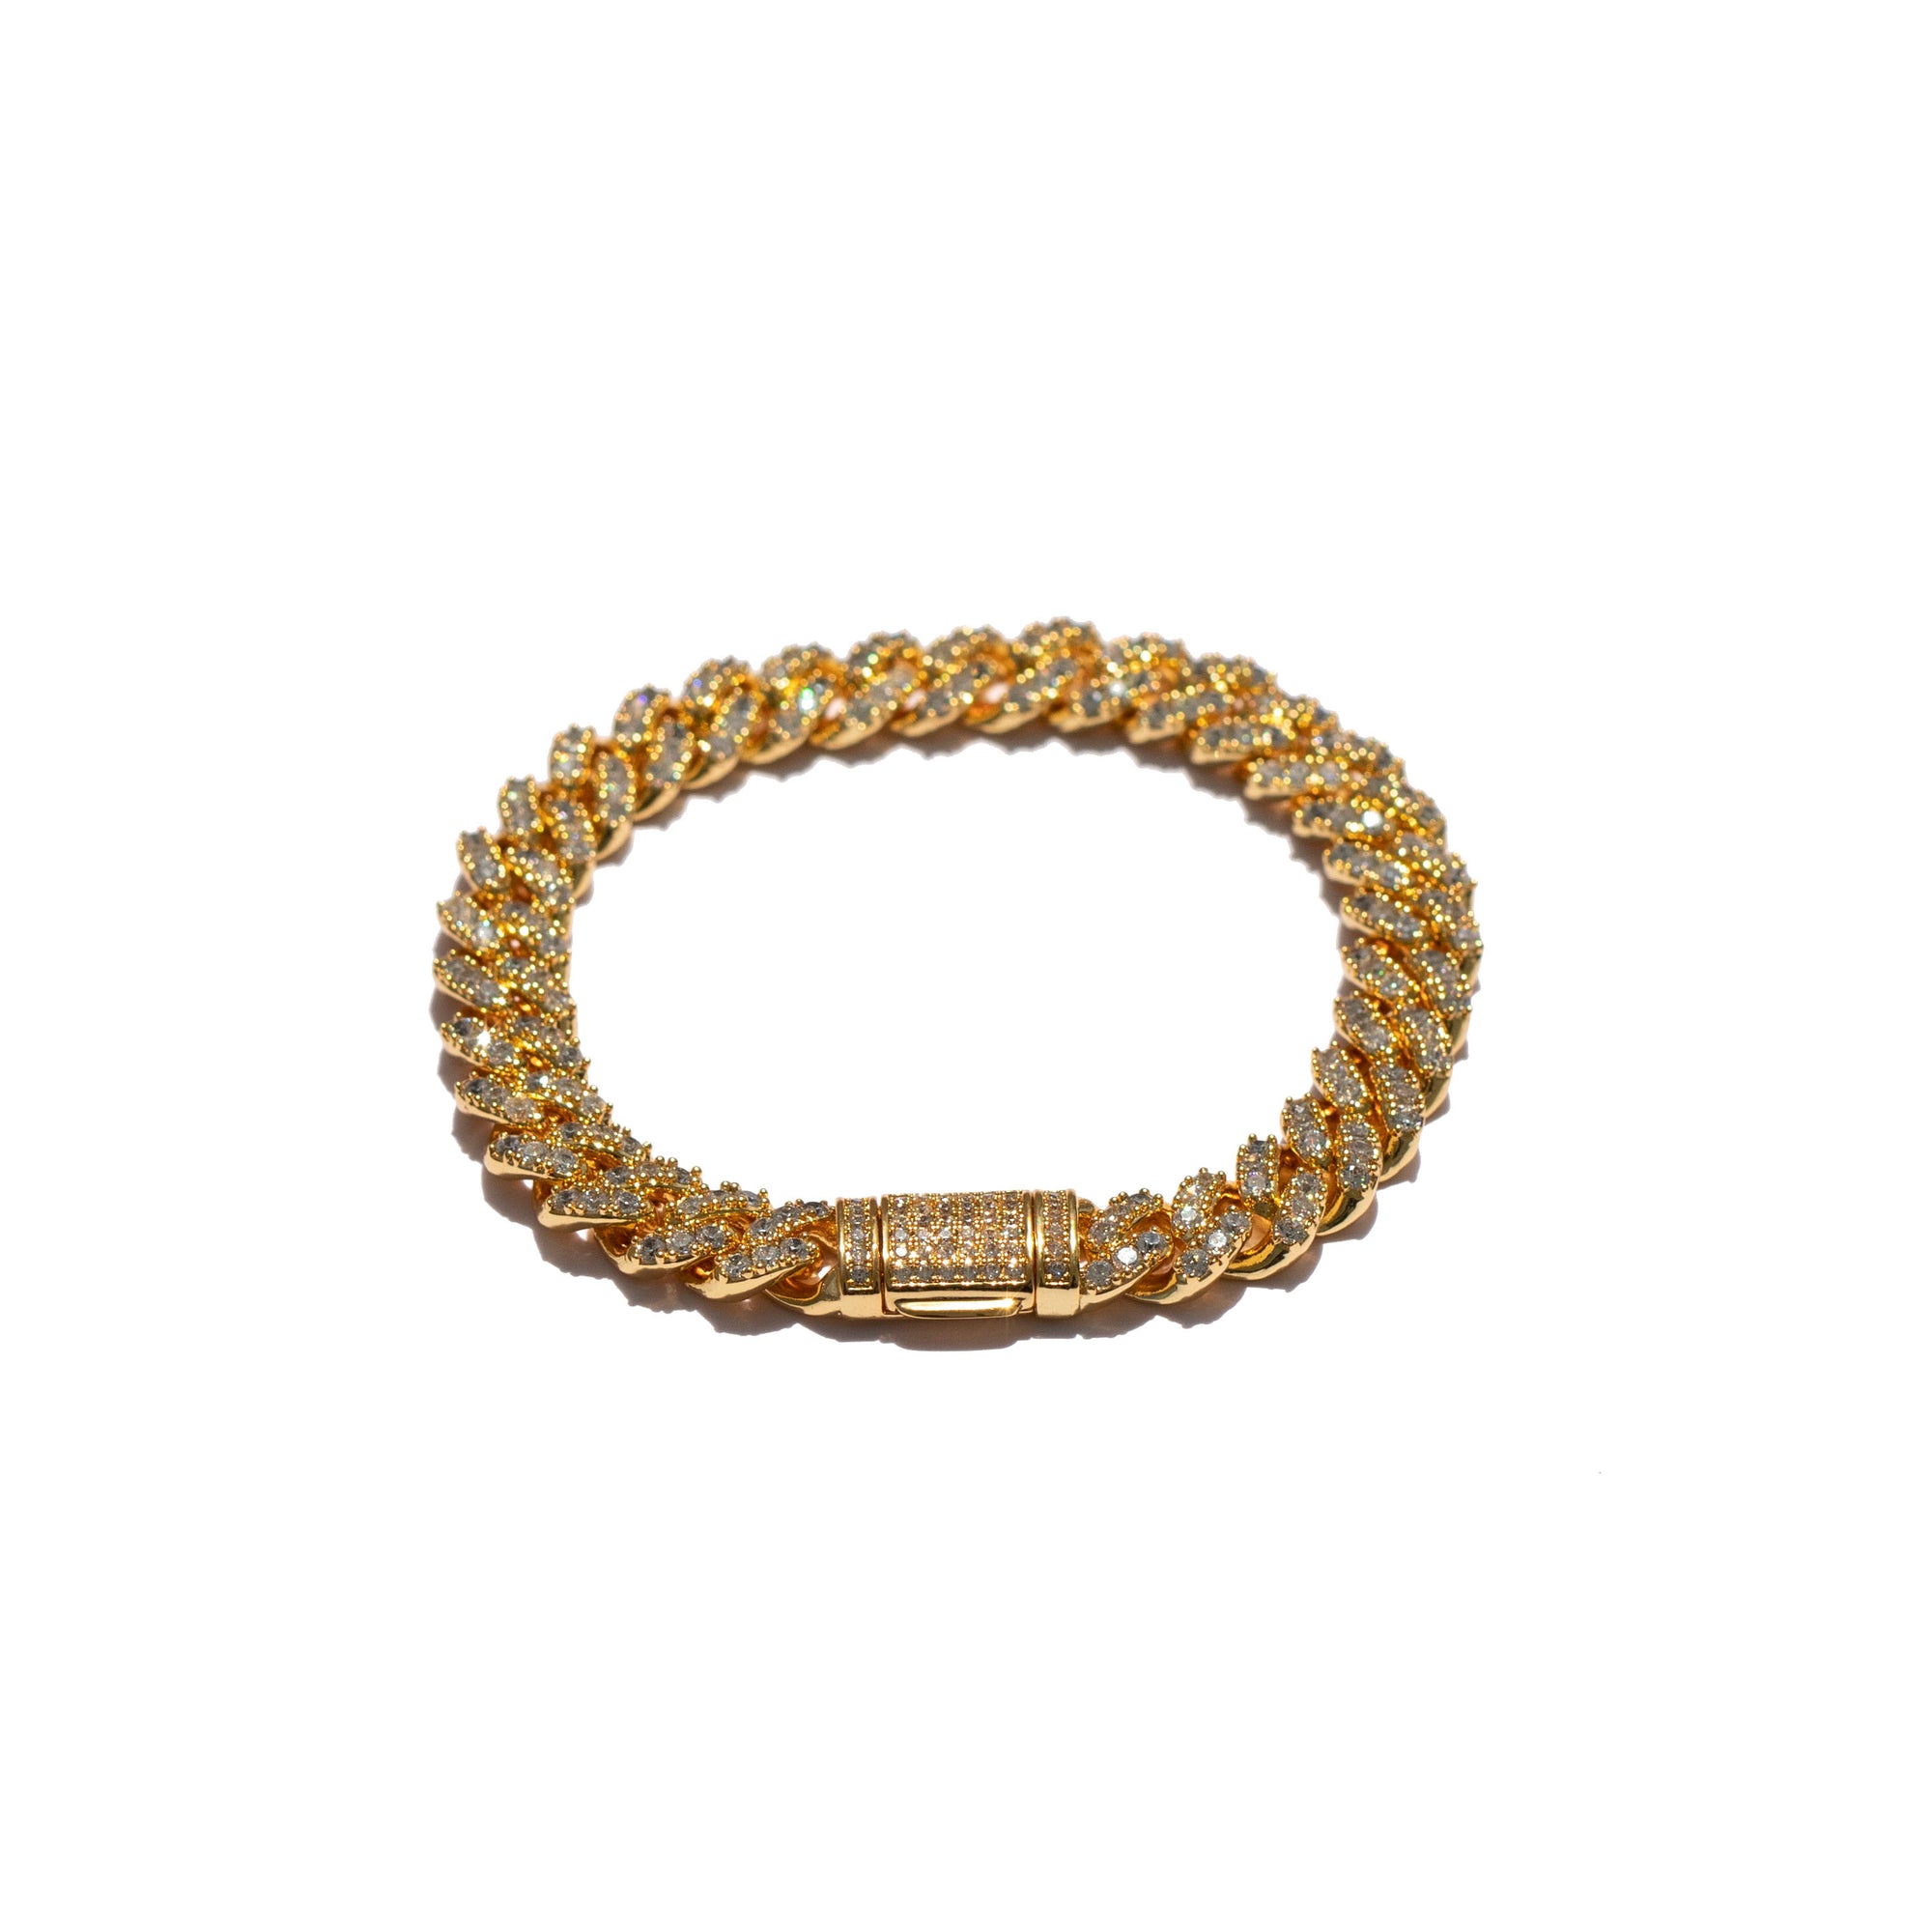 Gorgeous Demi-Fine 18K Gold Filled Premium Cuban Link Pave Bracelet with Locking Clasp